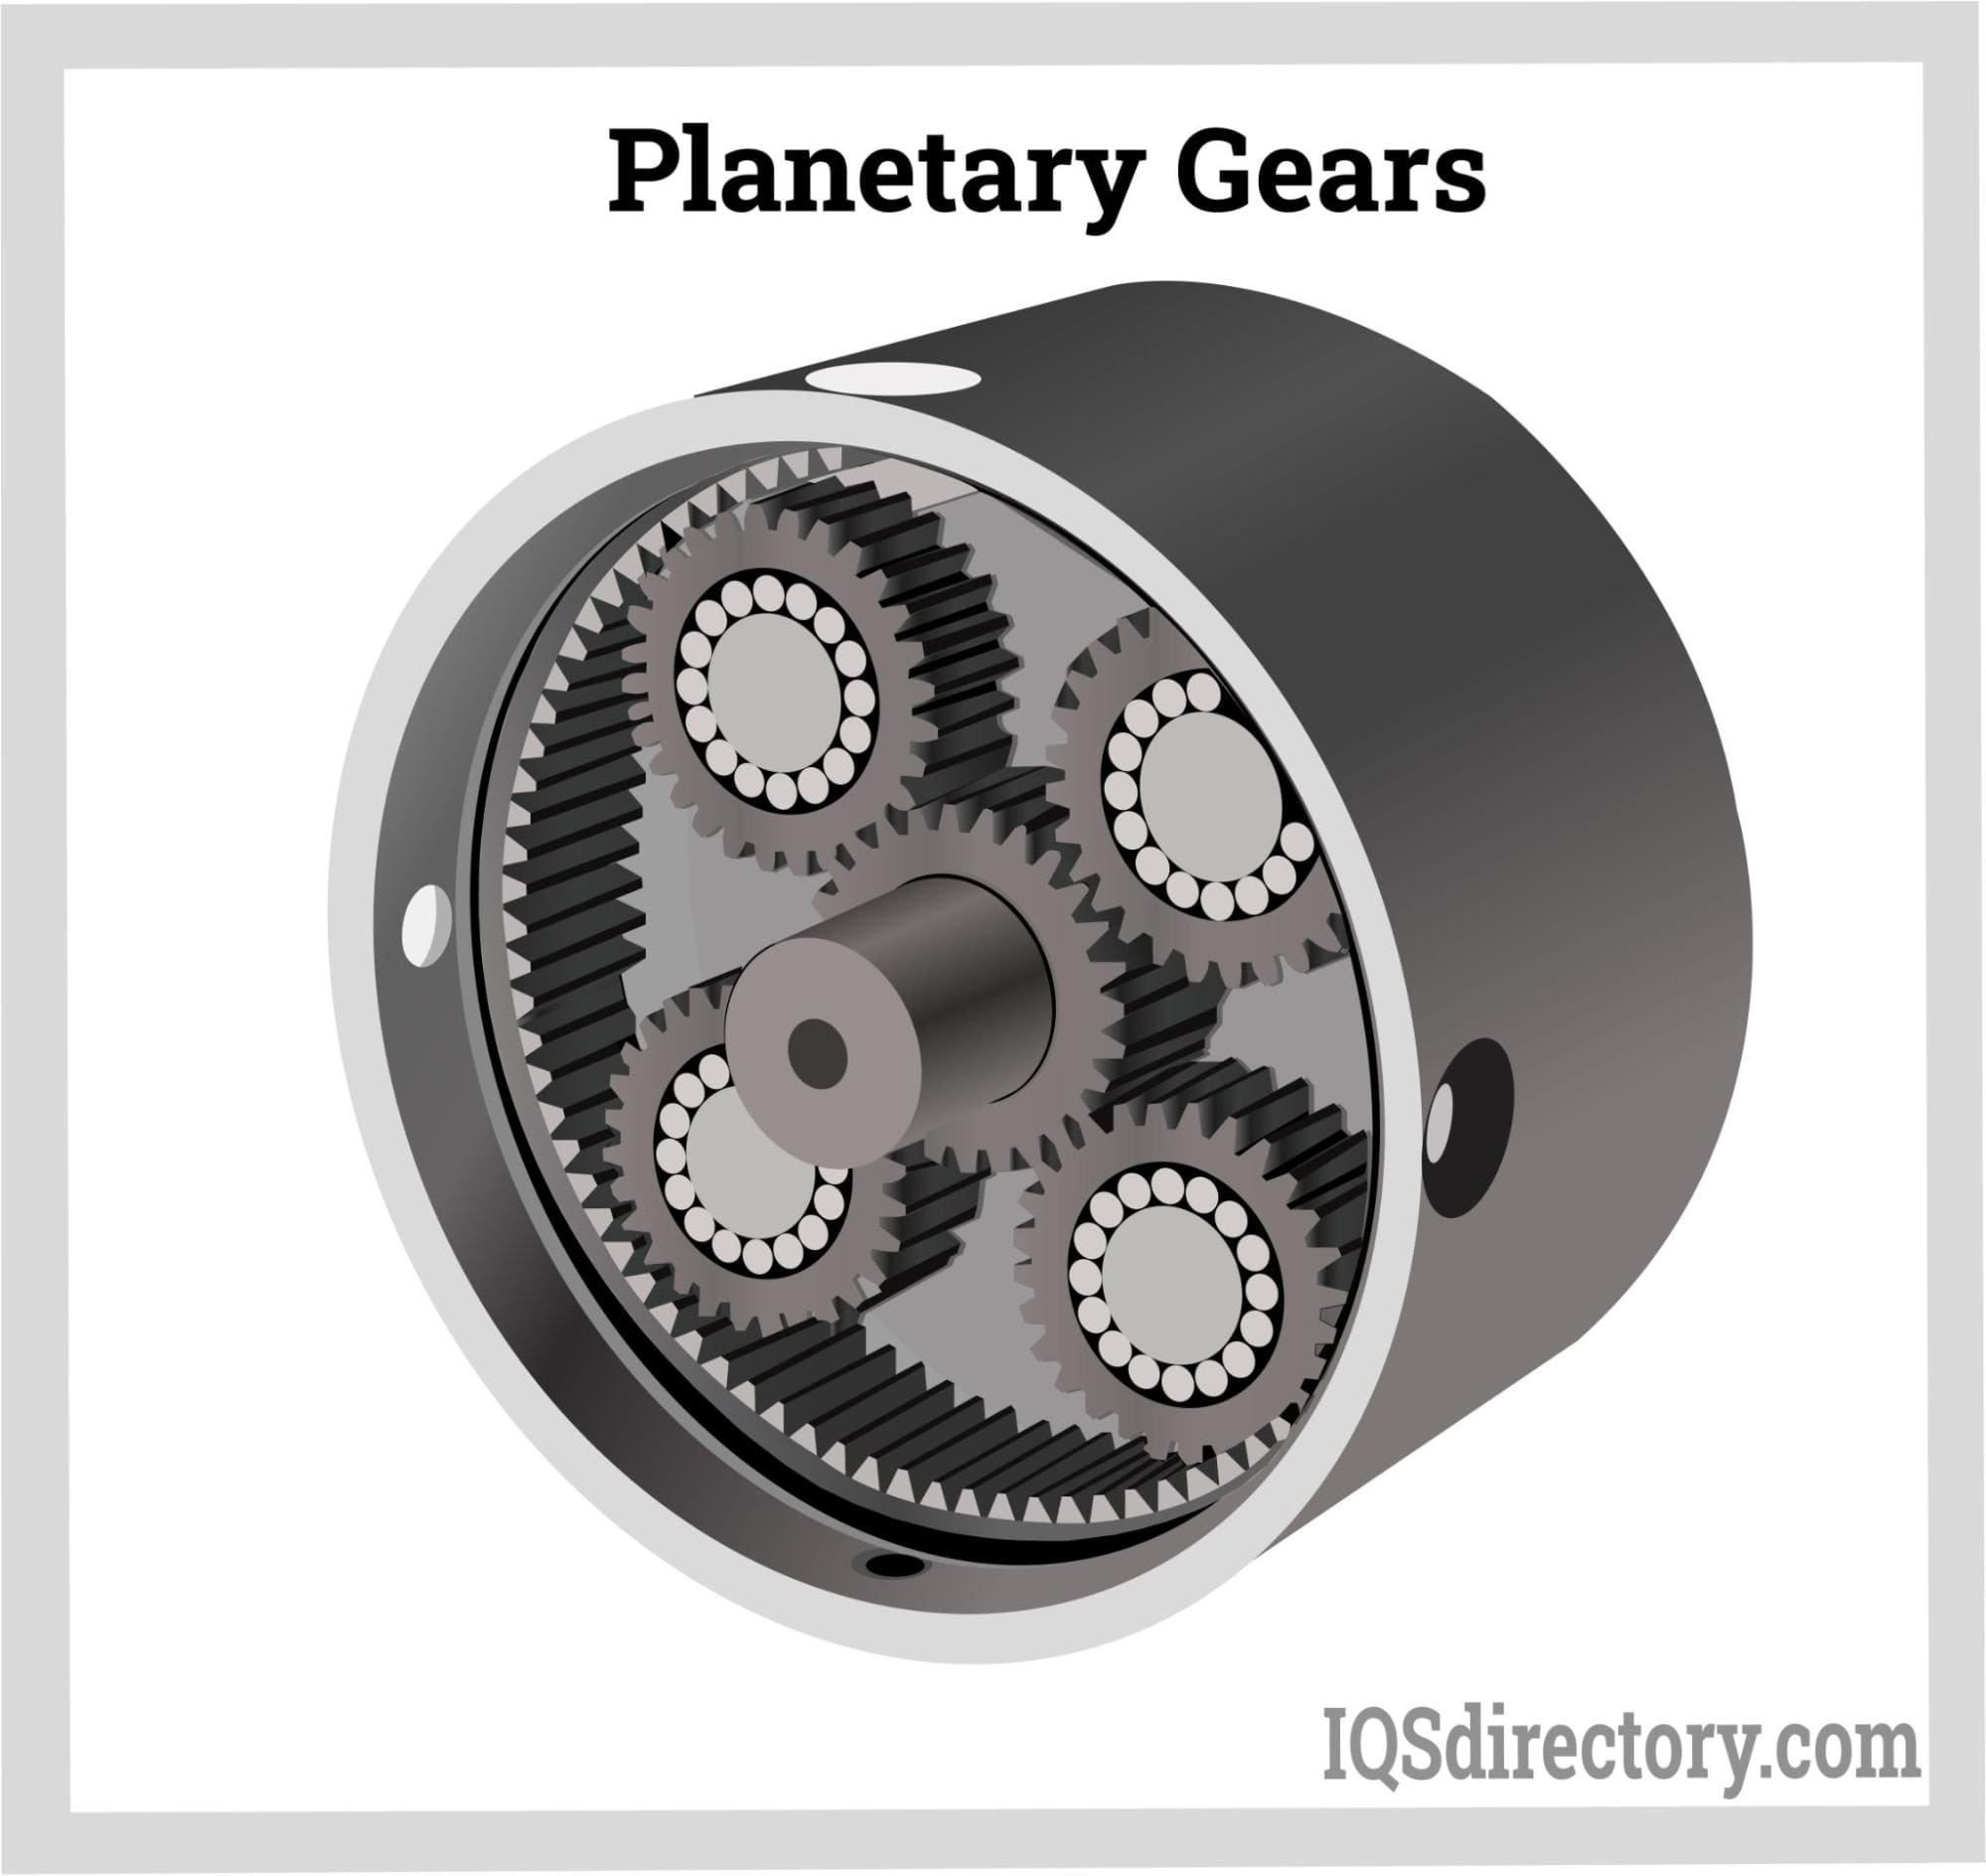 planetary gear